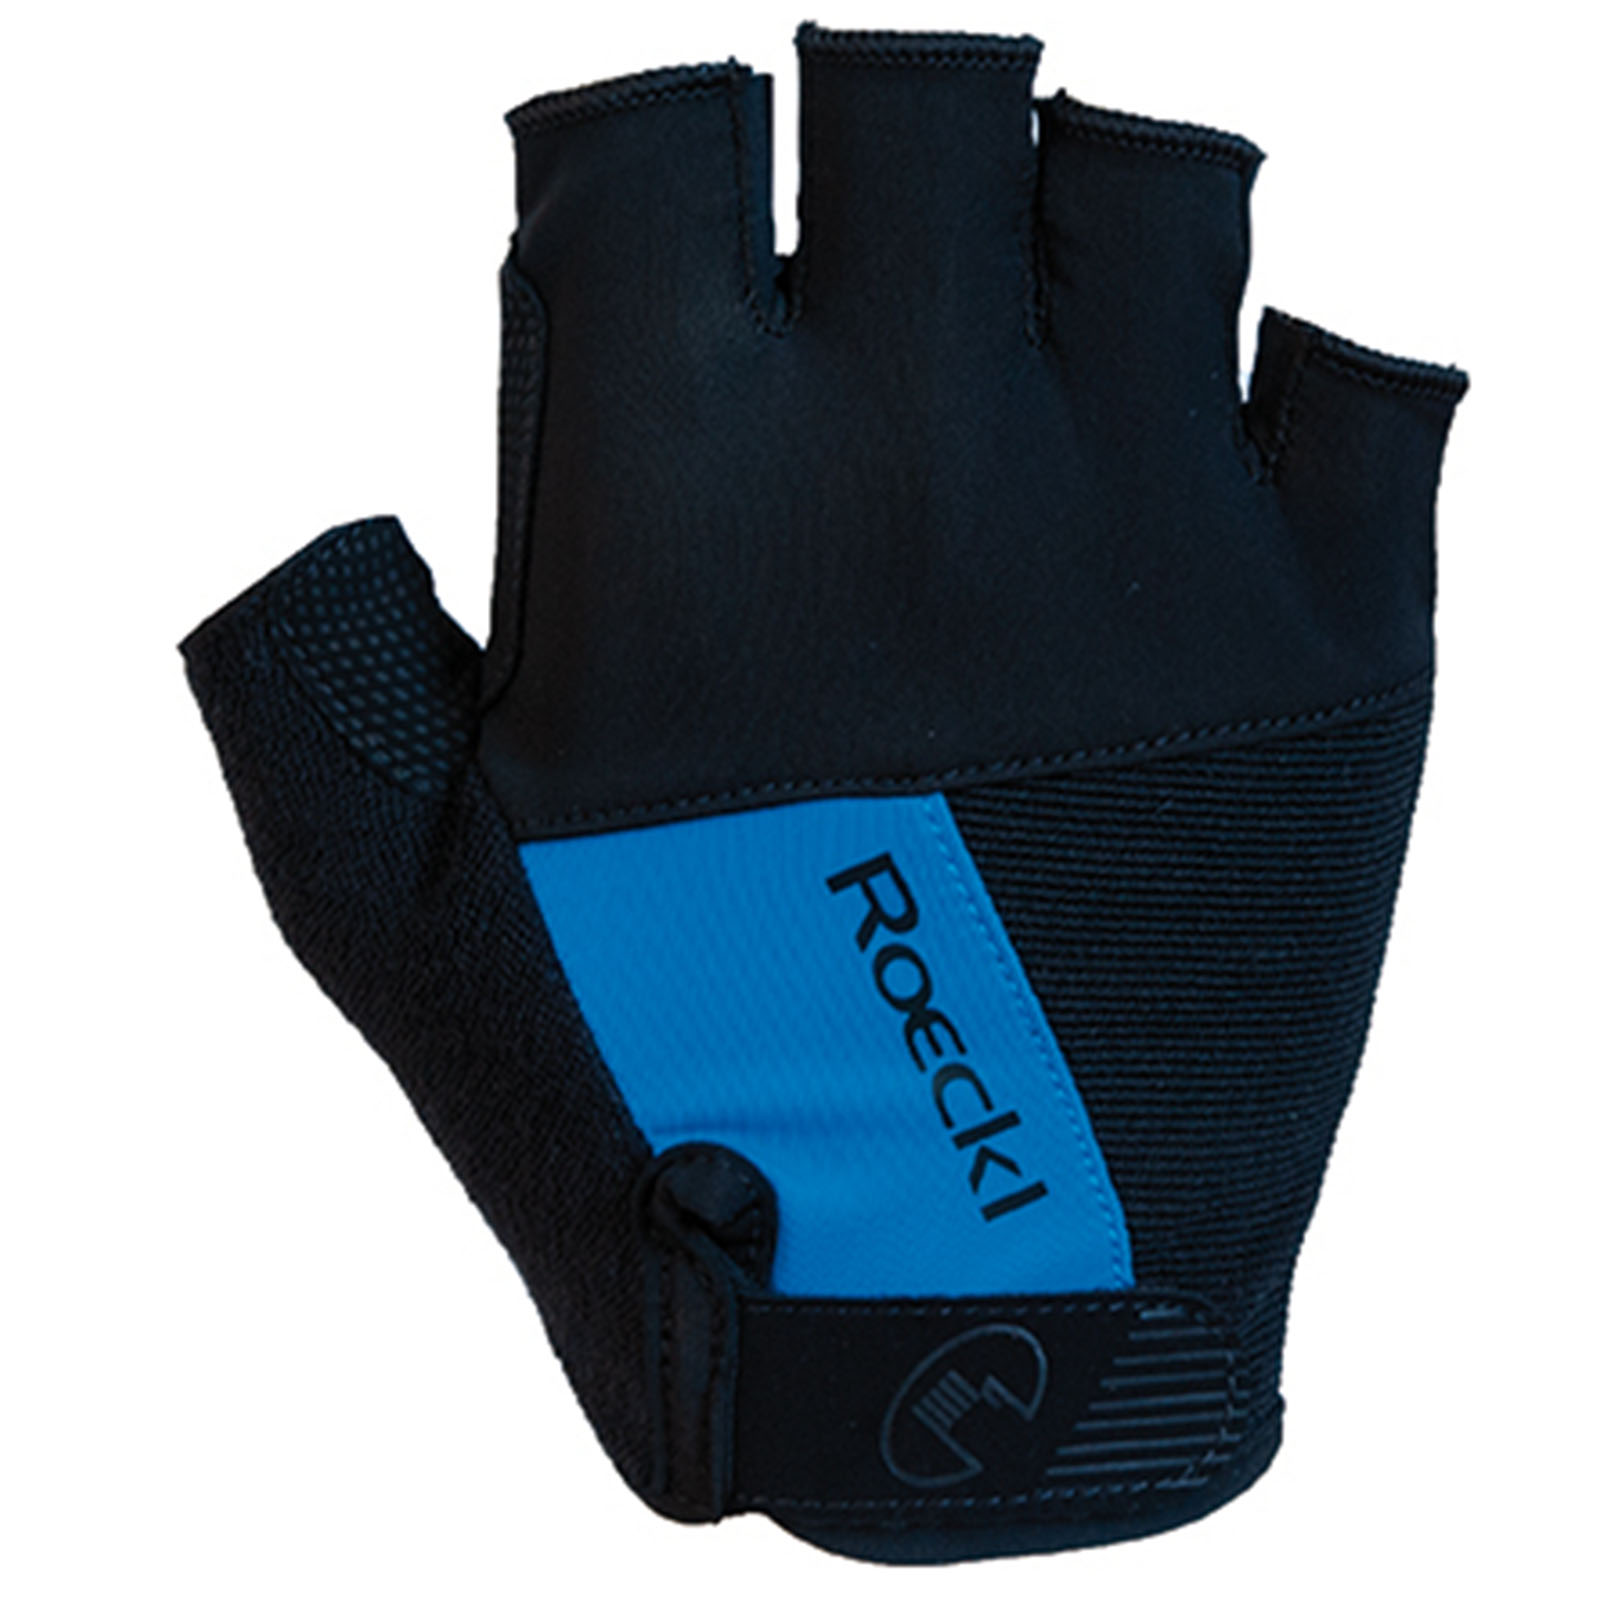 Roeckl Handschuhe Basic Nuxis schwarz/blau Gr. 7